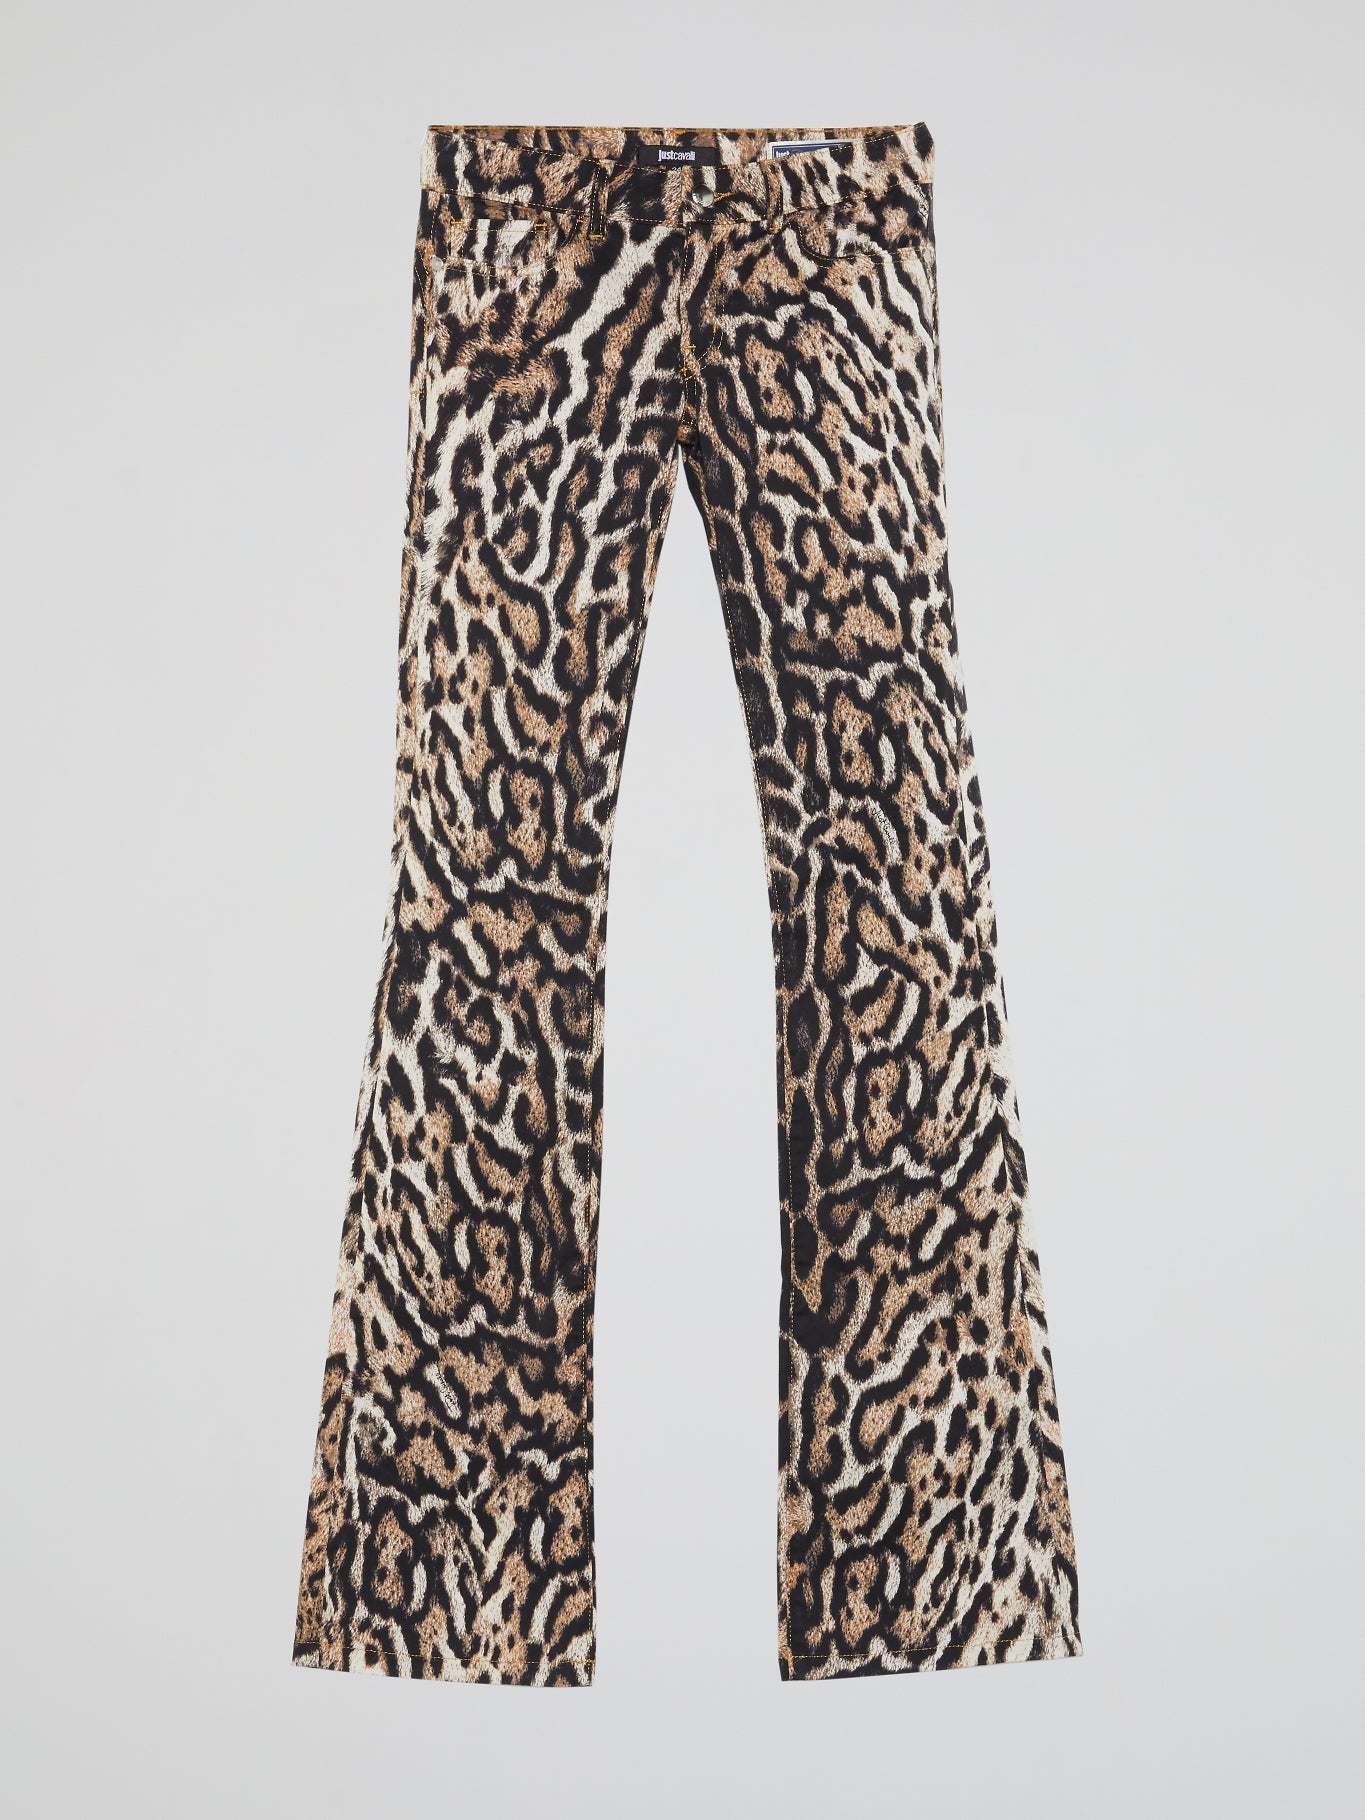 Leopard Print Bootcut Pants